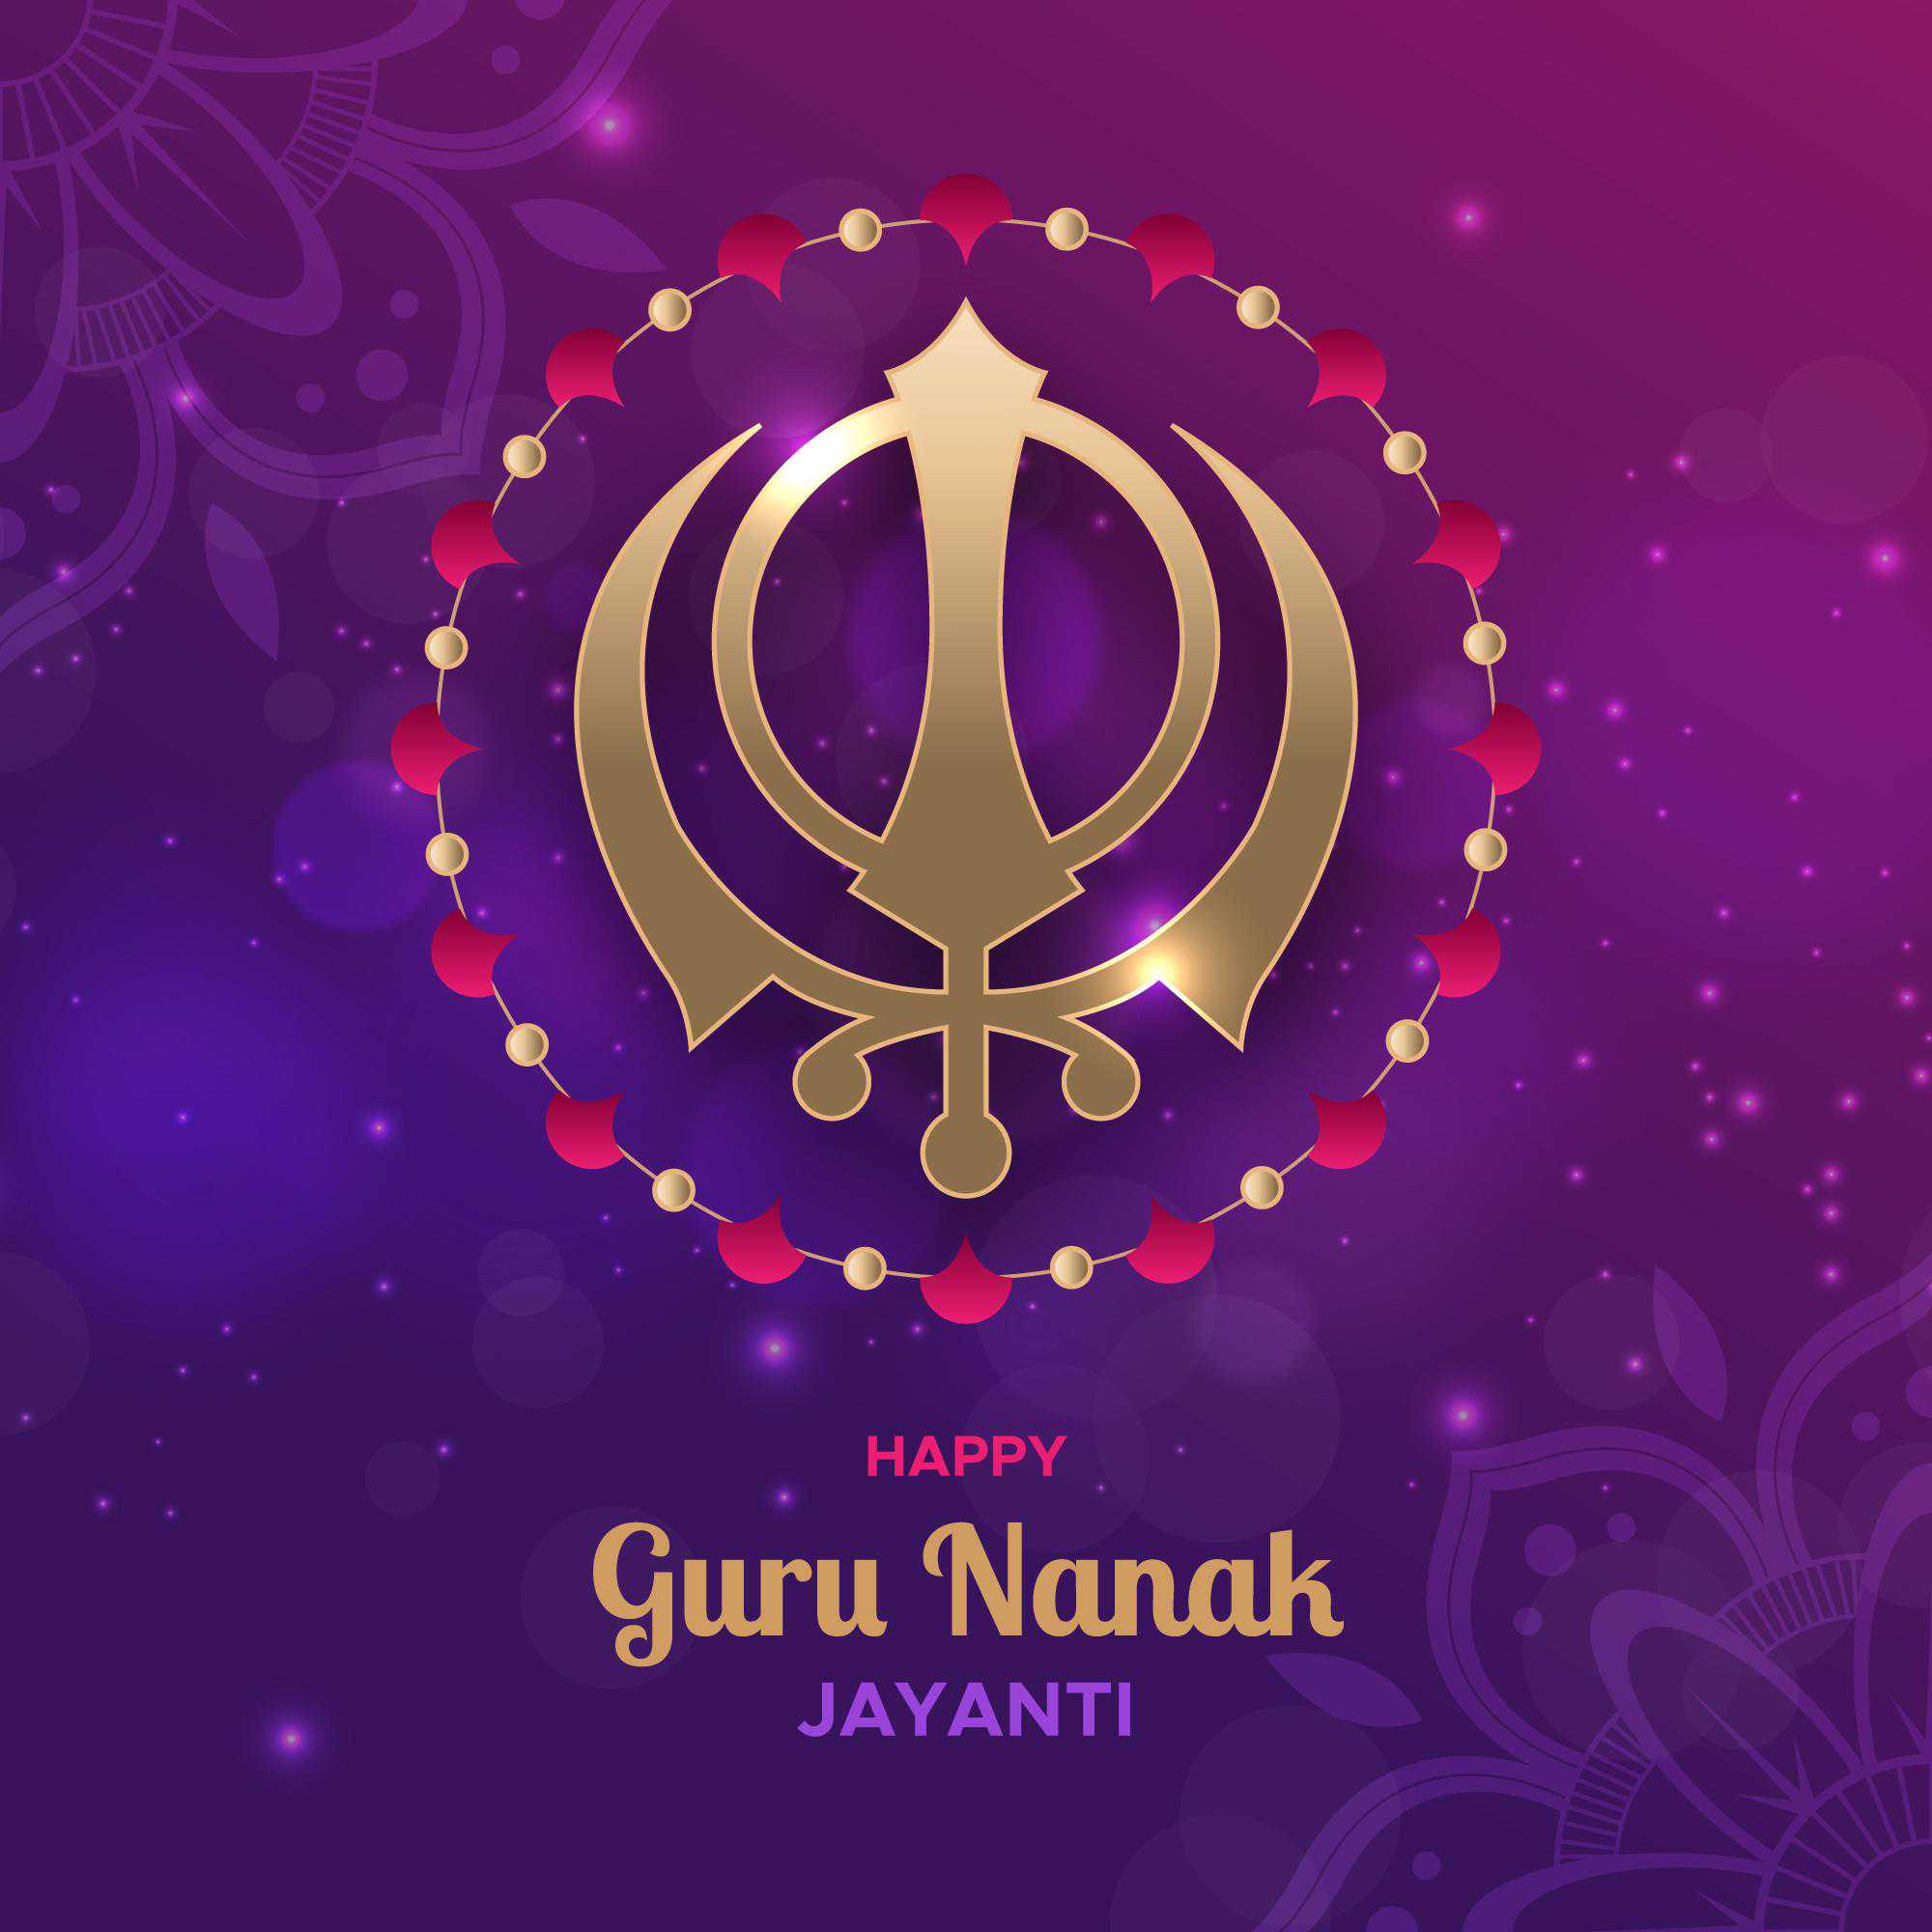 Happy guru nanak jayanti image download